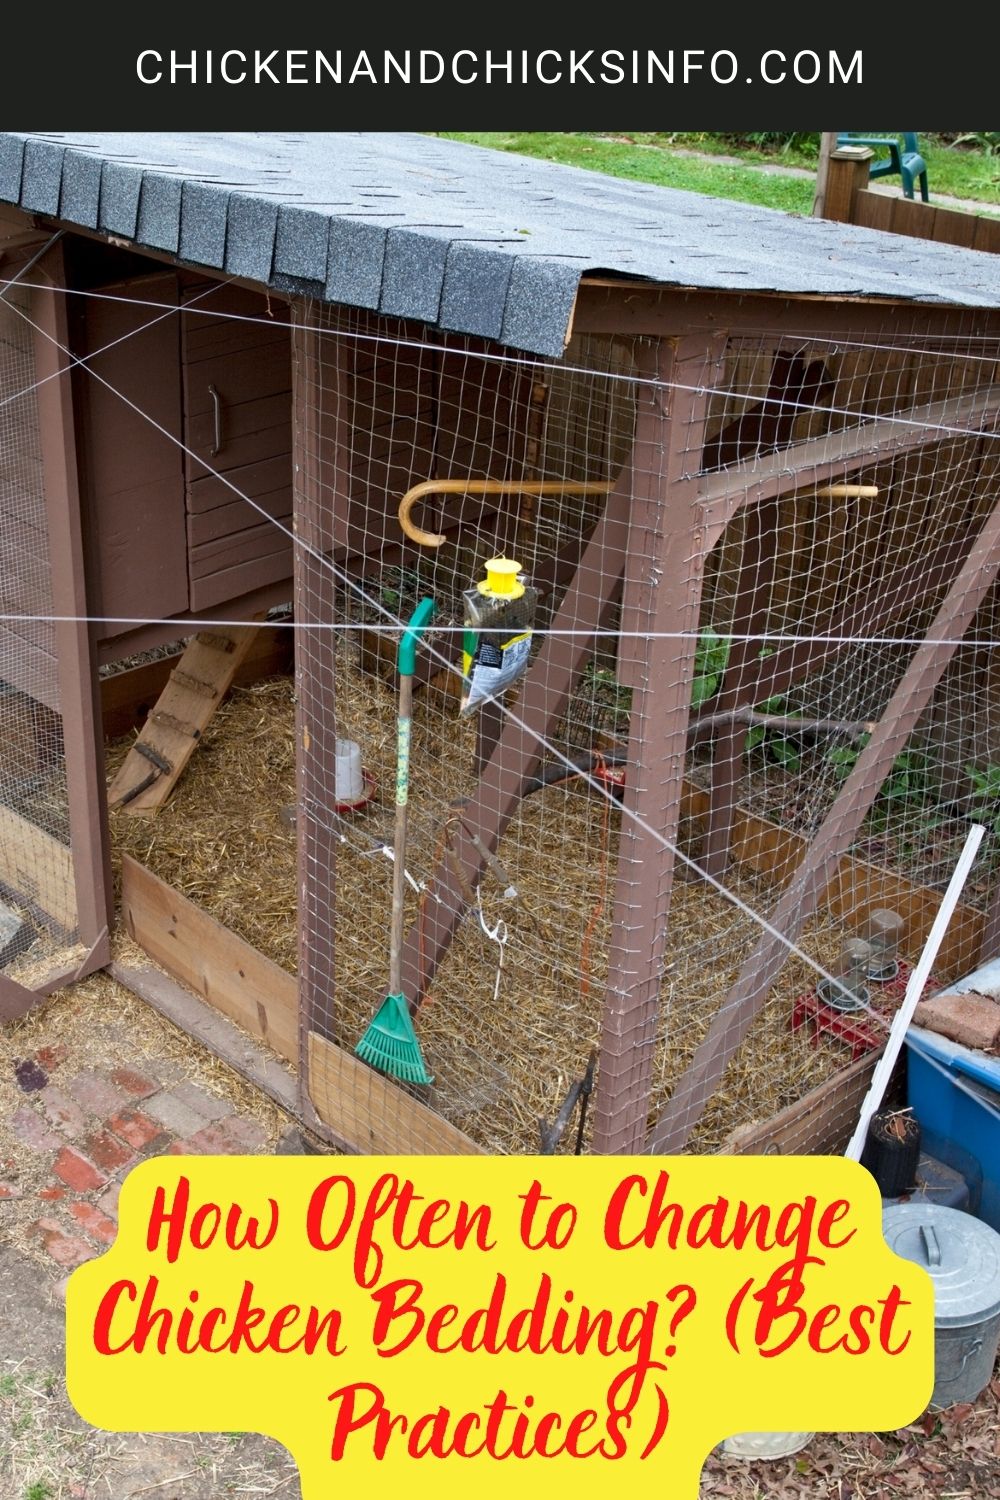 How Often to Change Chicken Bedding? (Best Practices) poster.
